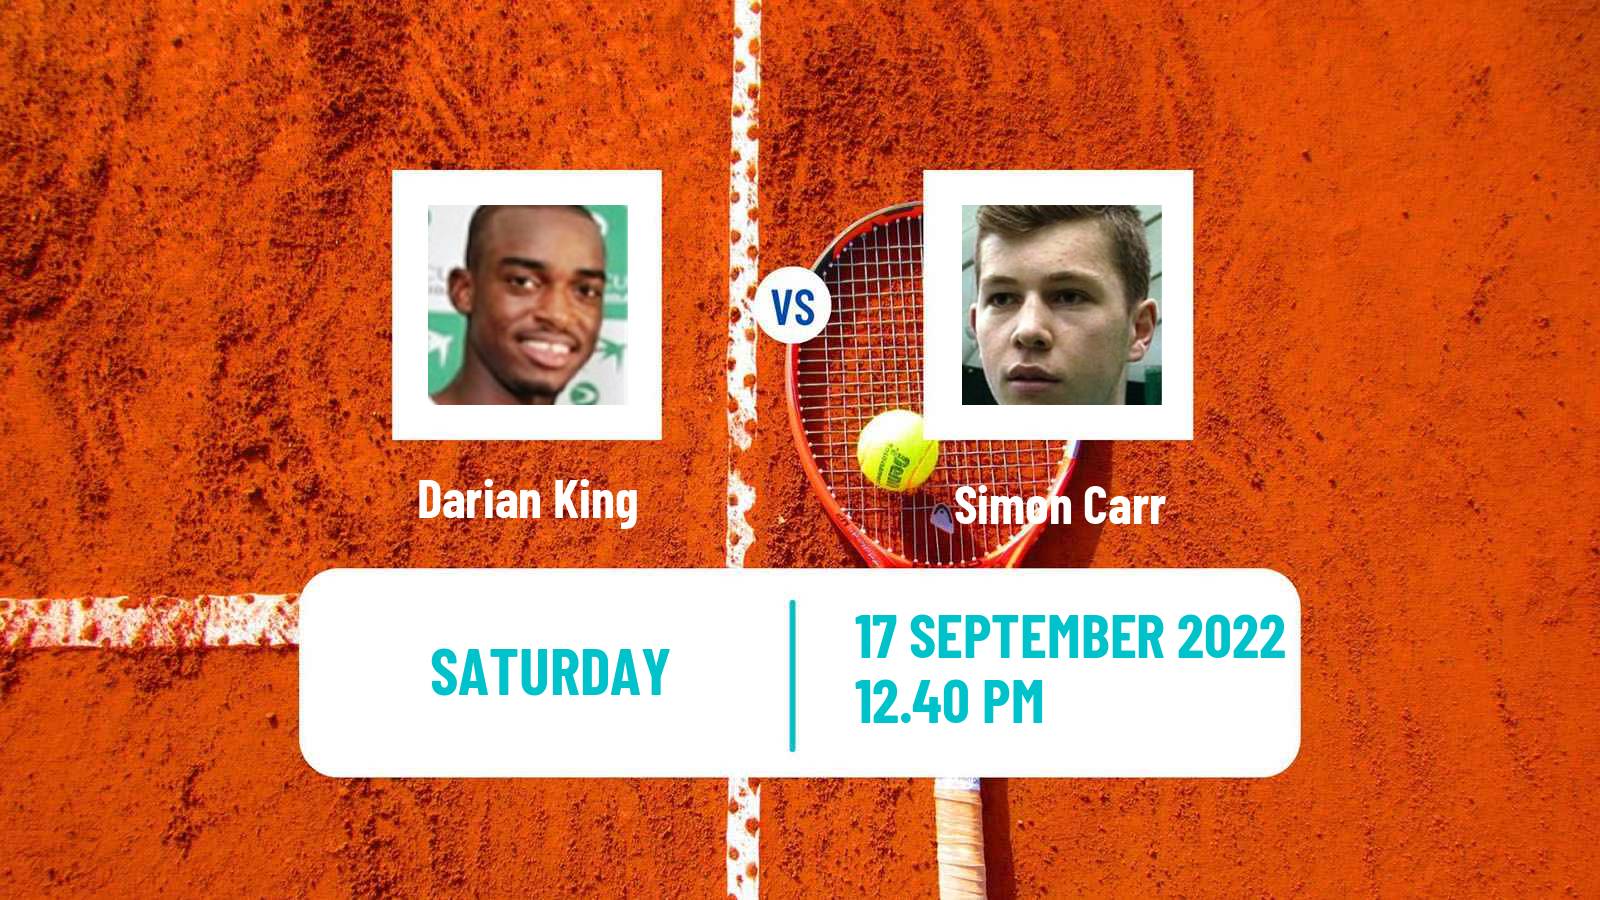 Tennis Davis Cup World Group II Darian King - Simon Carr